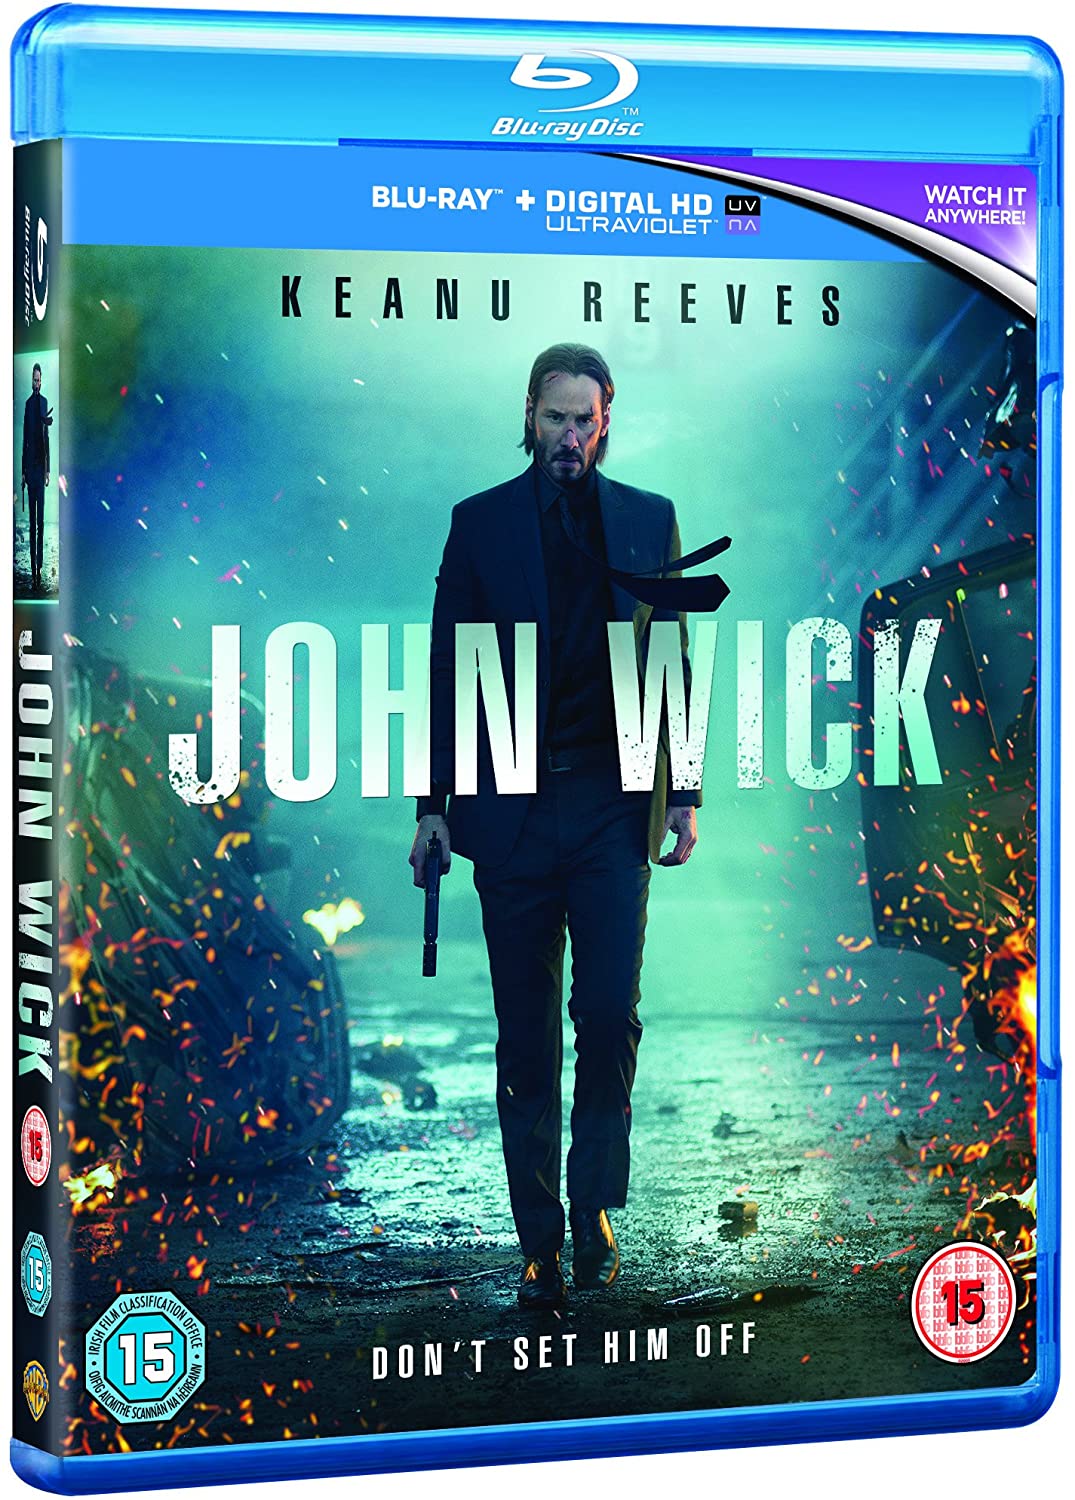 John Wick [2015] [Region Free] – Action/Thriller [Blu-ray]